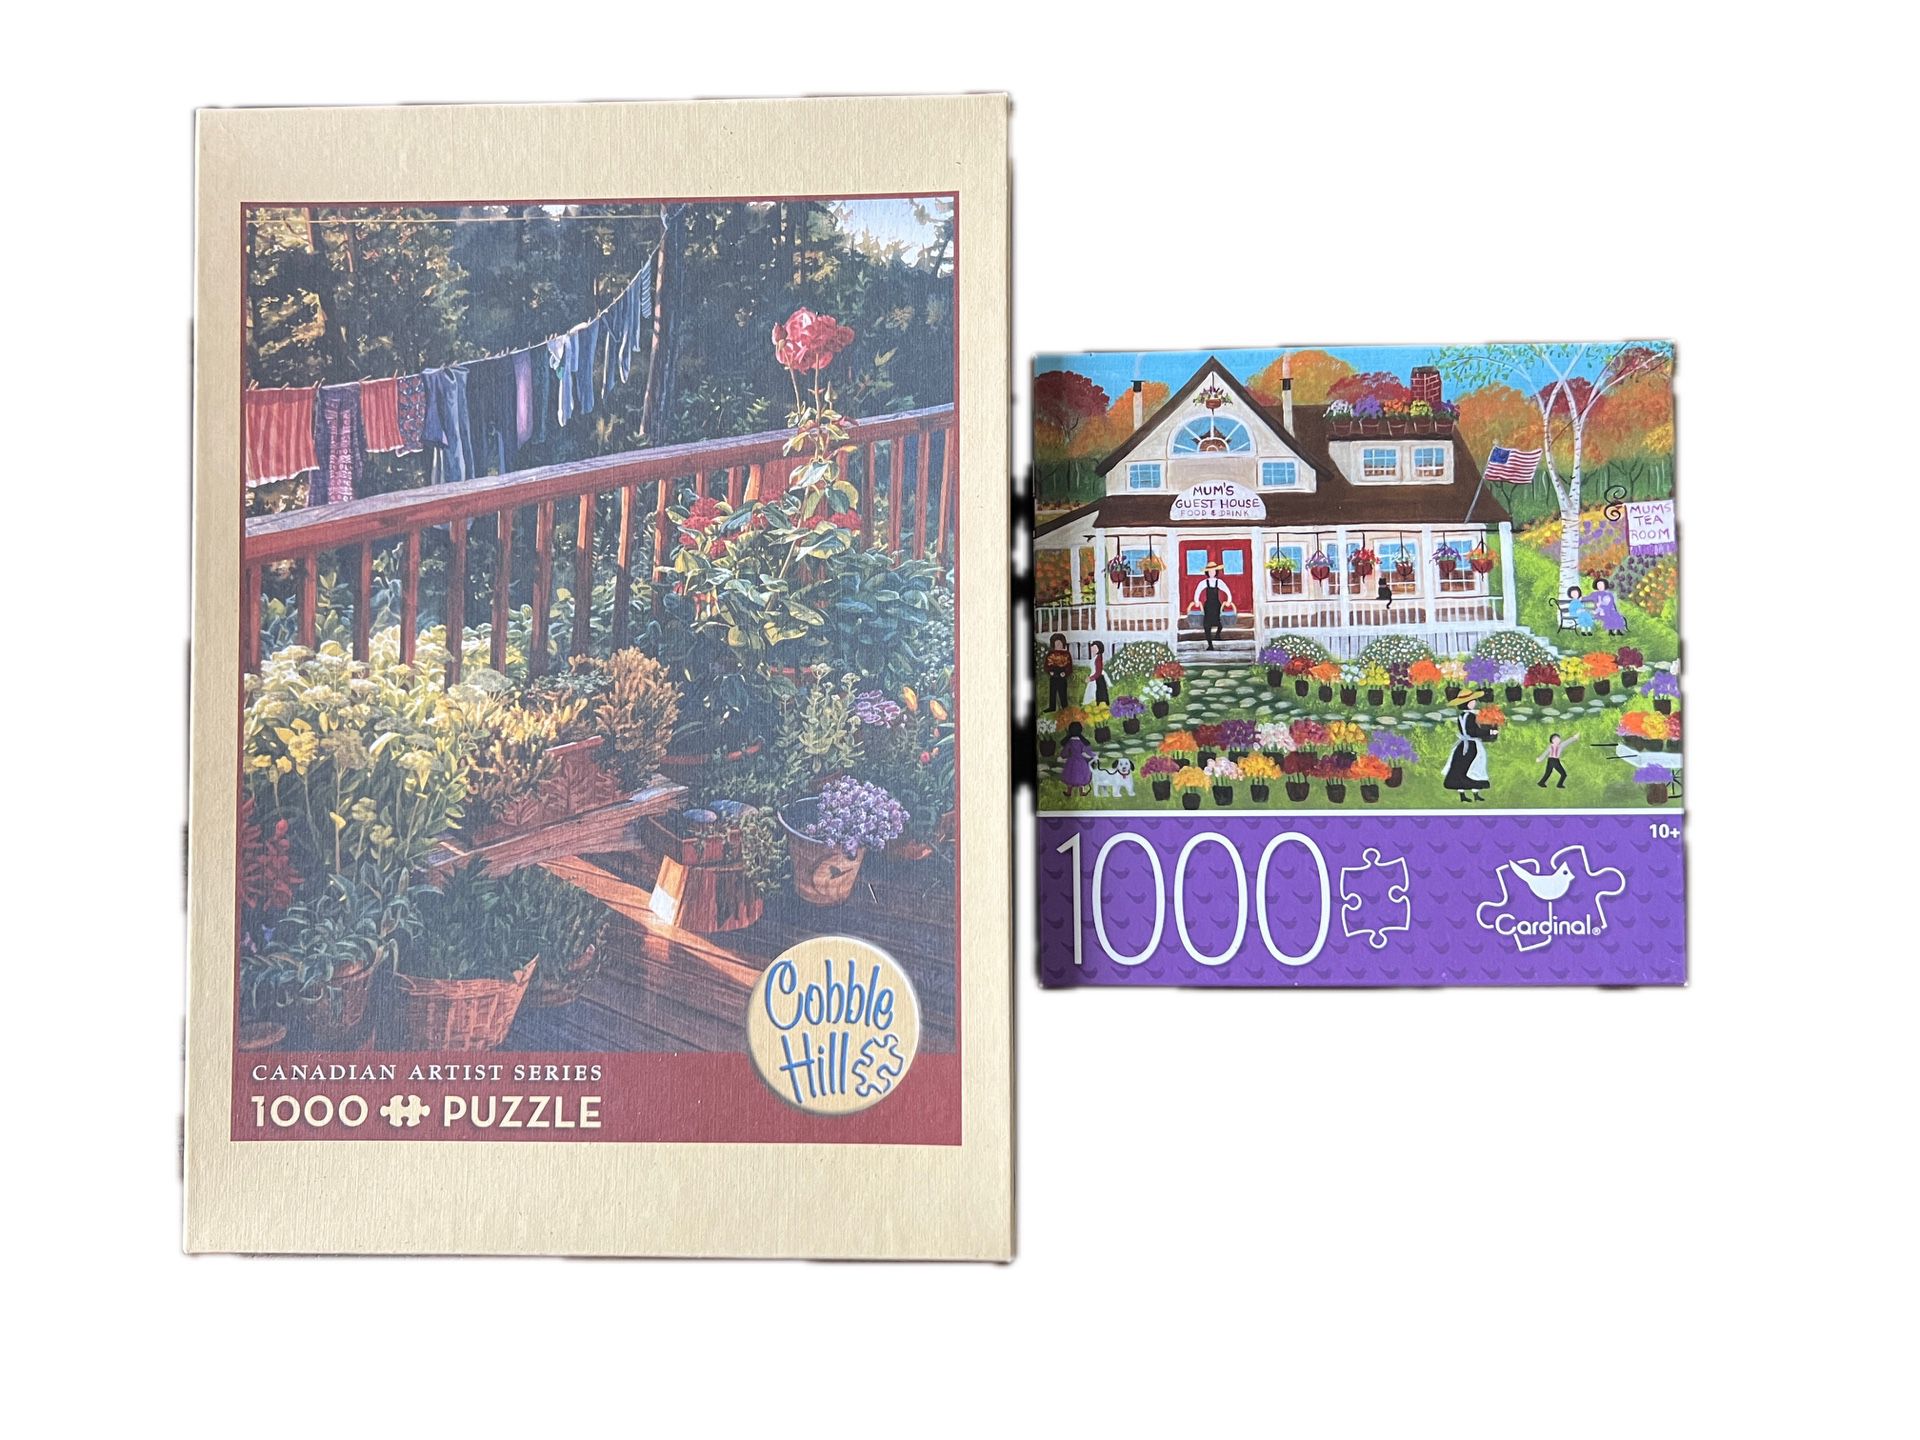 Lot of 2, 1000 pcs jigsaw puzzles